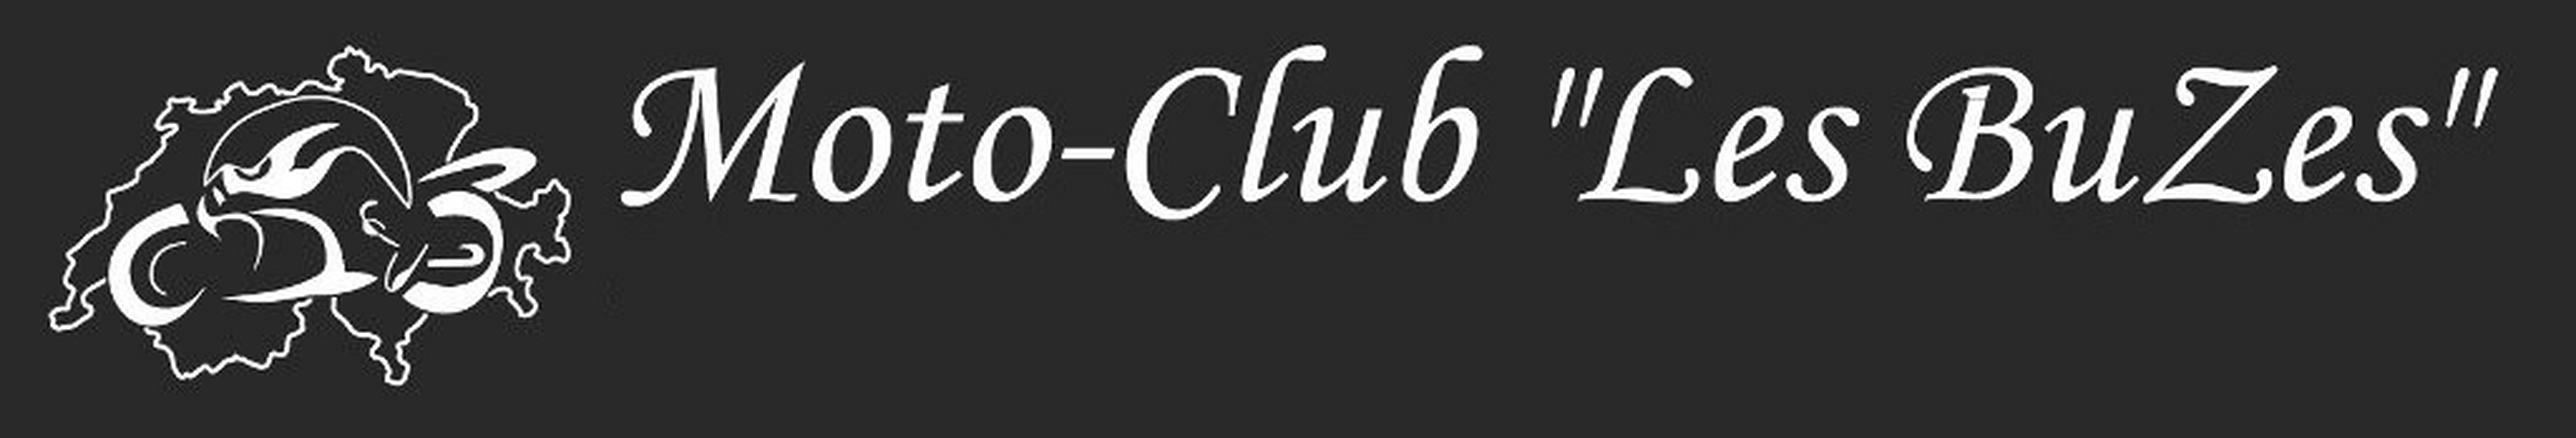 Logo_Moto-Club_Les-BuZes_long_banniere_new_site_2.jpg